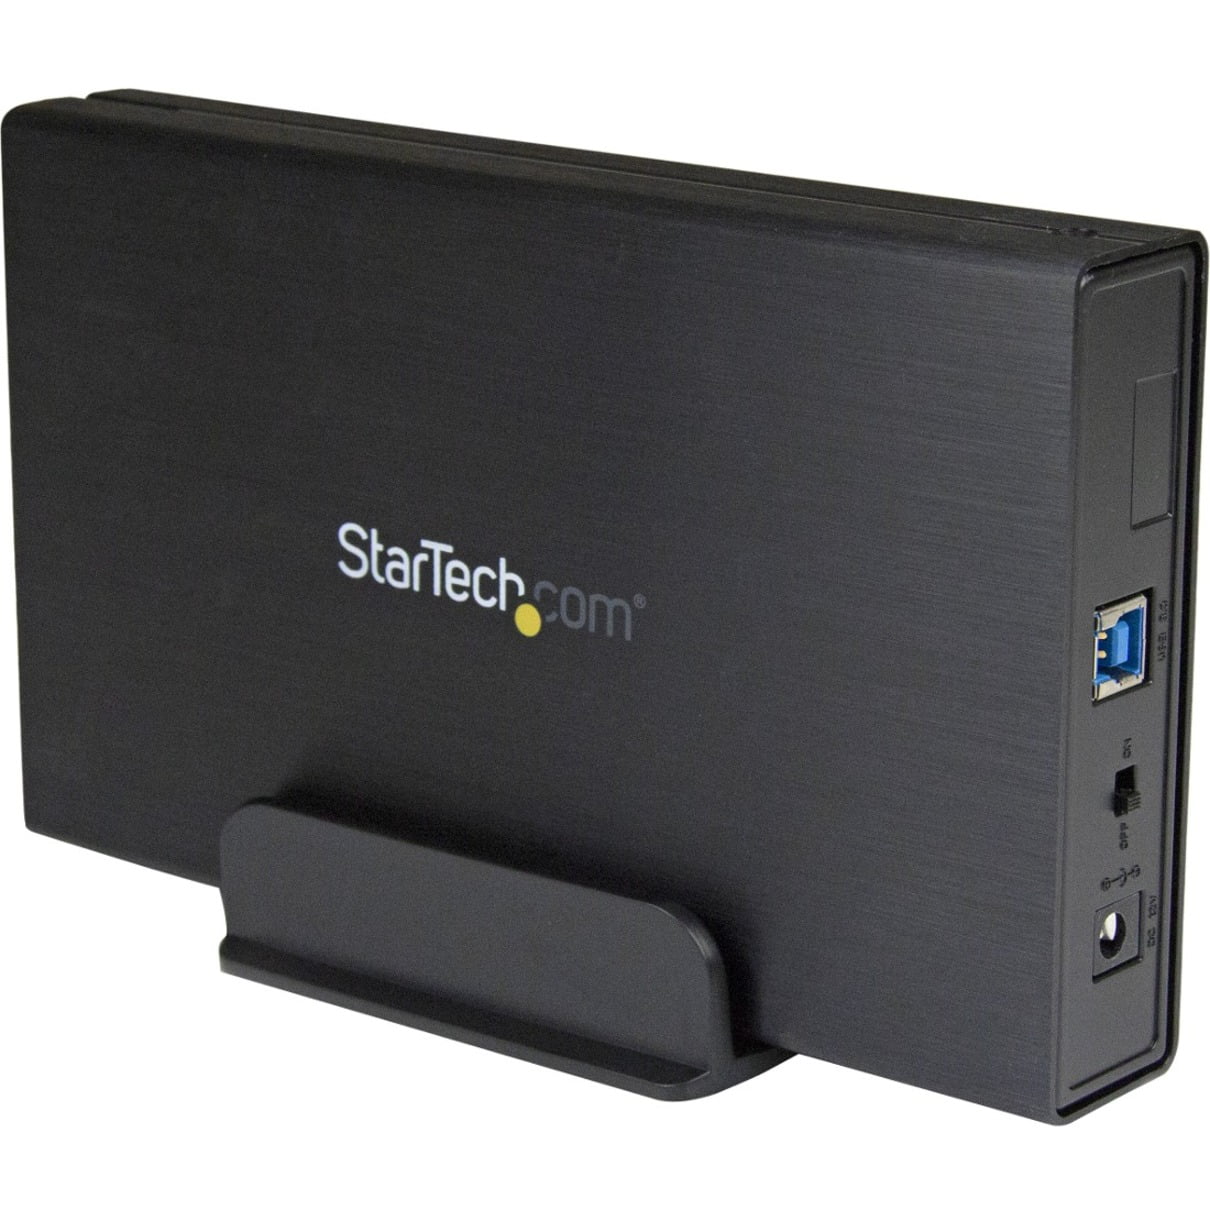 SET of 5 Seagate Desktop 3.5" USB 3.0 ENCLOSURES External SATA Hard Drive Case 